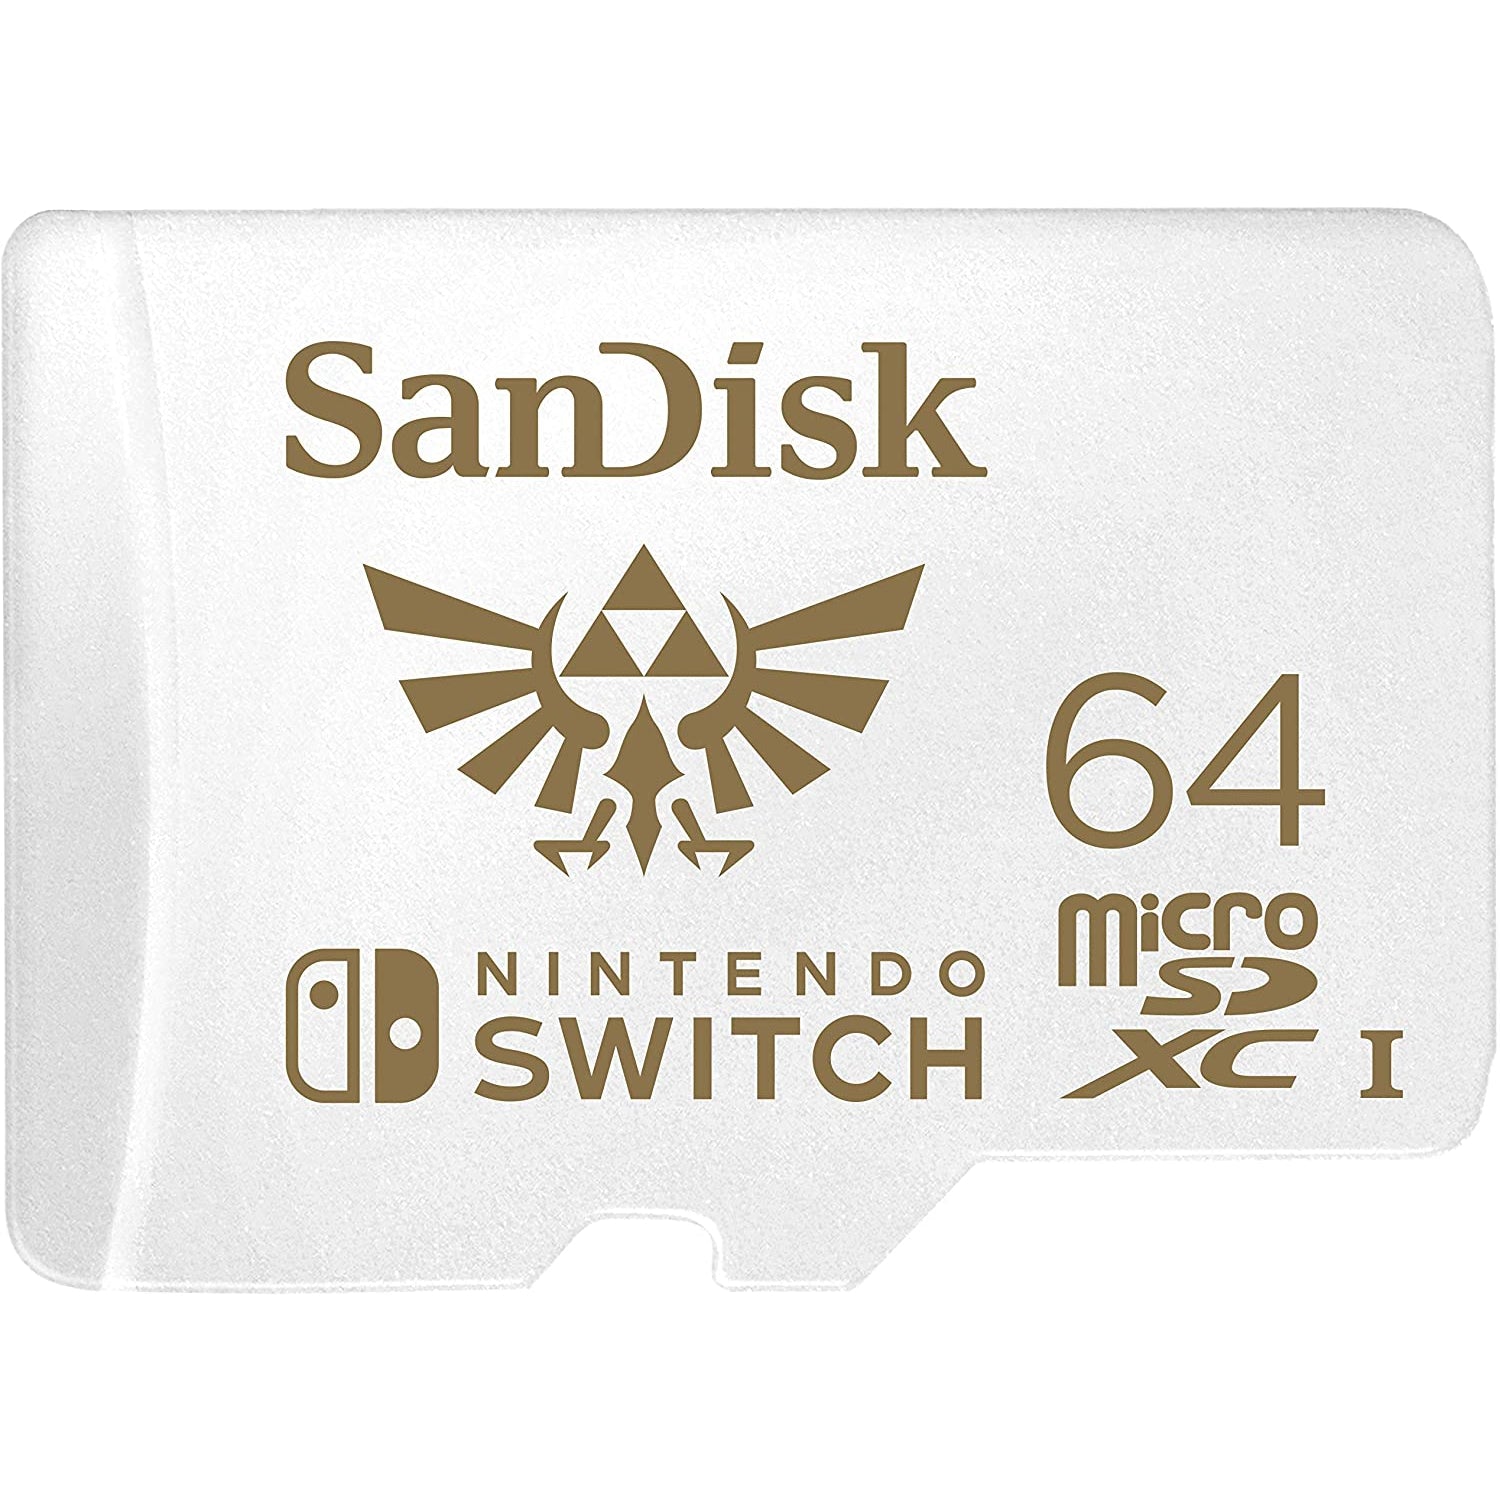 SanDisk microSDXC UHS-I card for Nintendo 64GB - Nintendo licensed Product